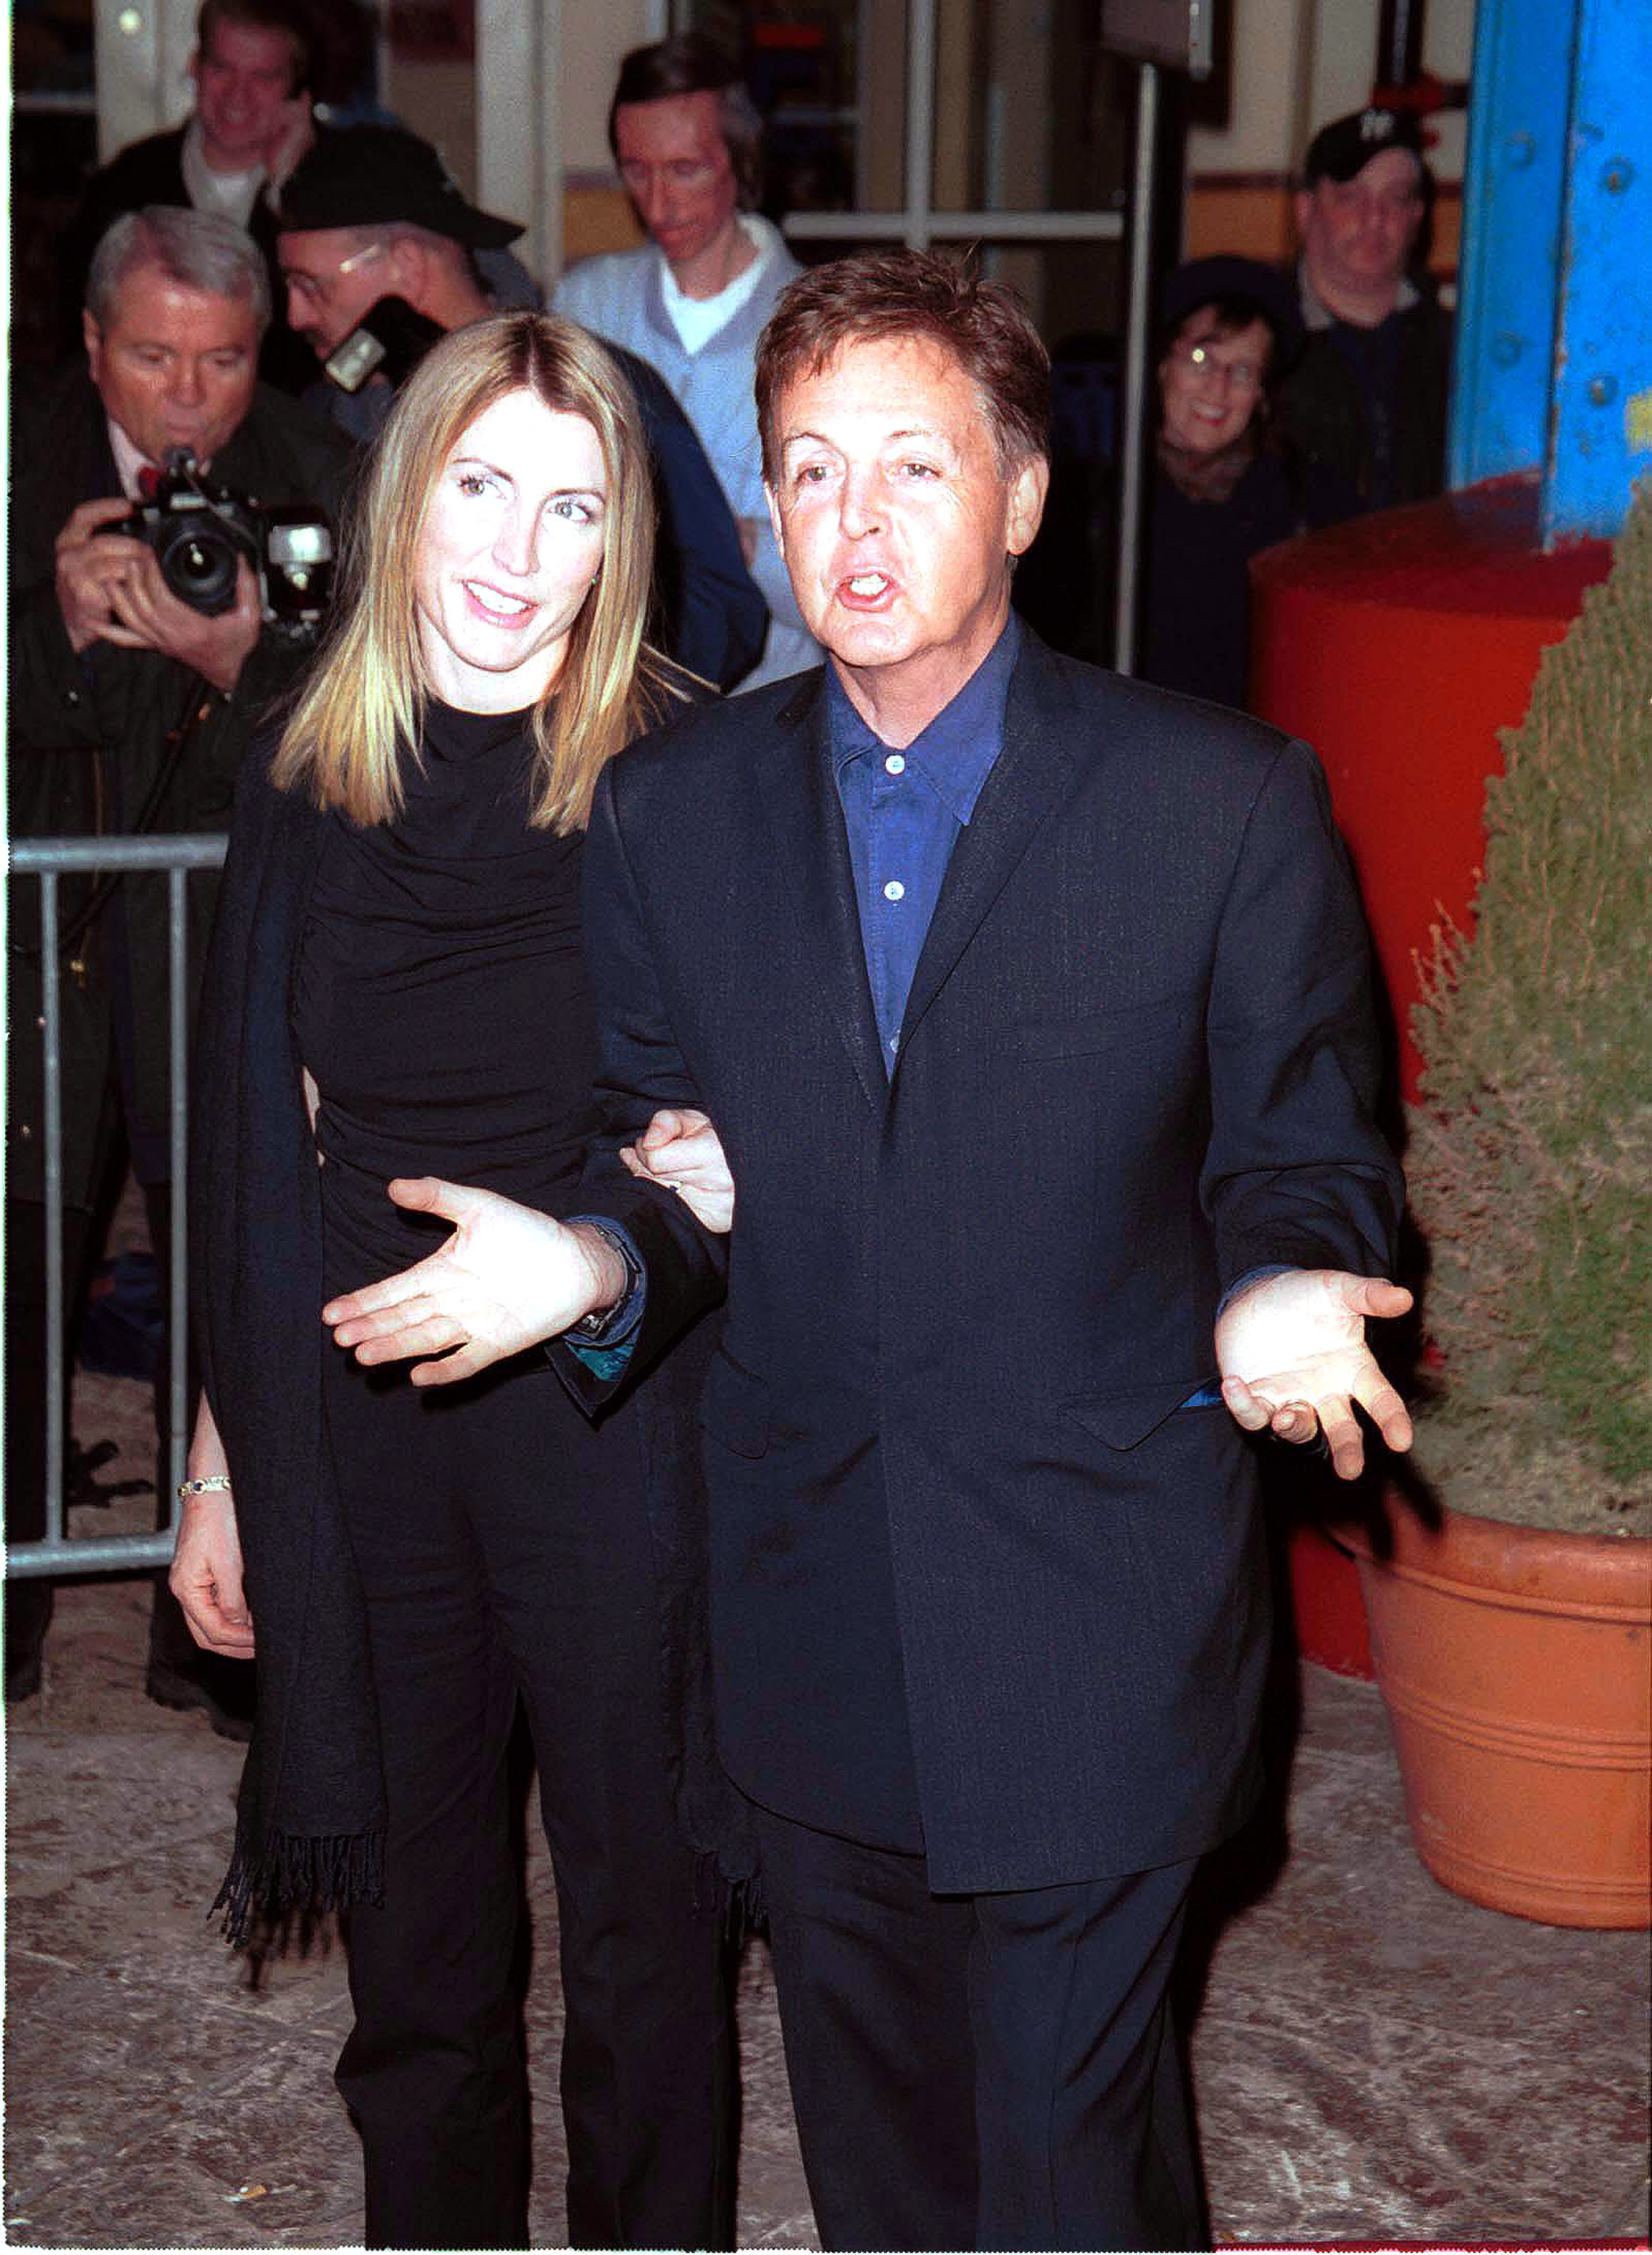 Paul McCartney und Heather Mills bei den 5th Annual Media Spotlight Awards am 28. Januar 2002 in New York City | Quelle: Getty Images